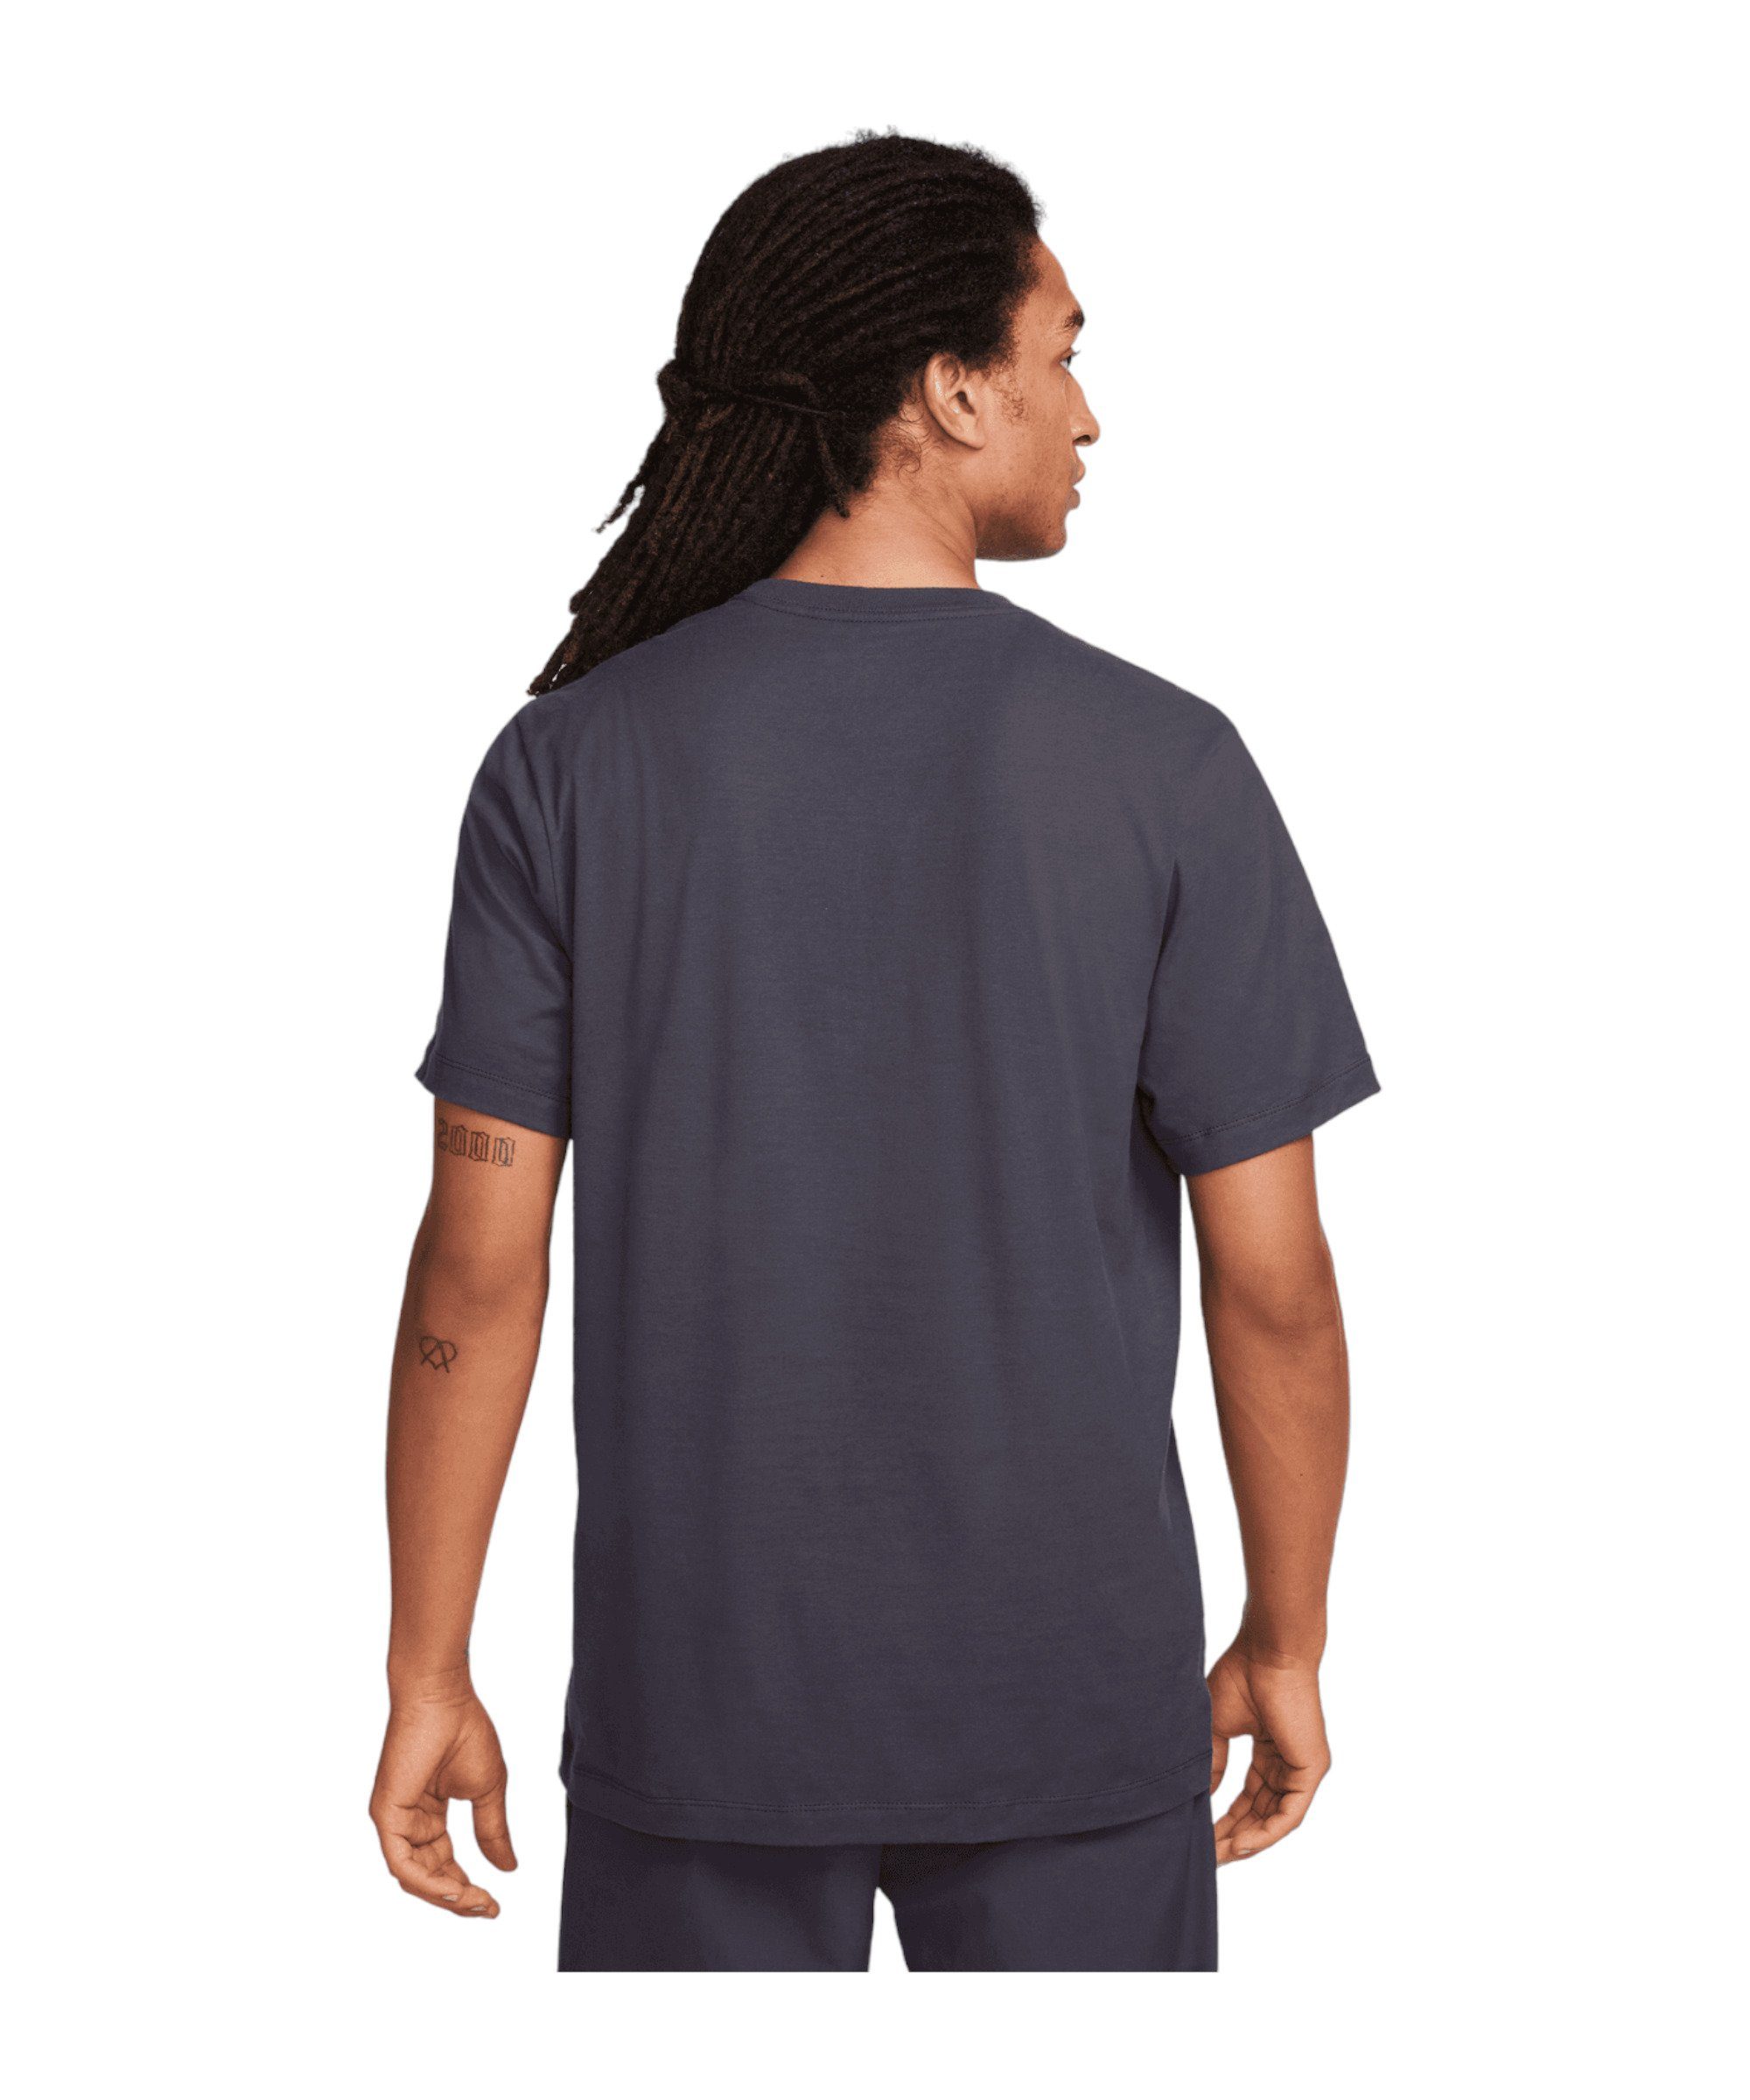 T-Shirt Nike Swoosh default T-Shirt grau FC Liverpool